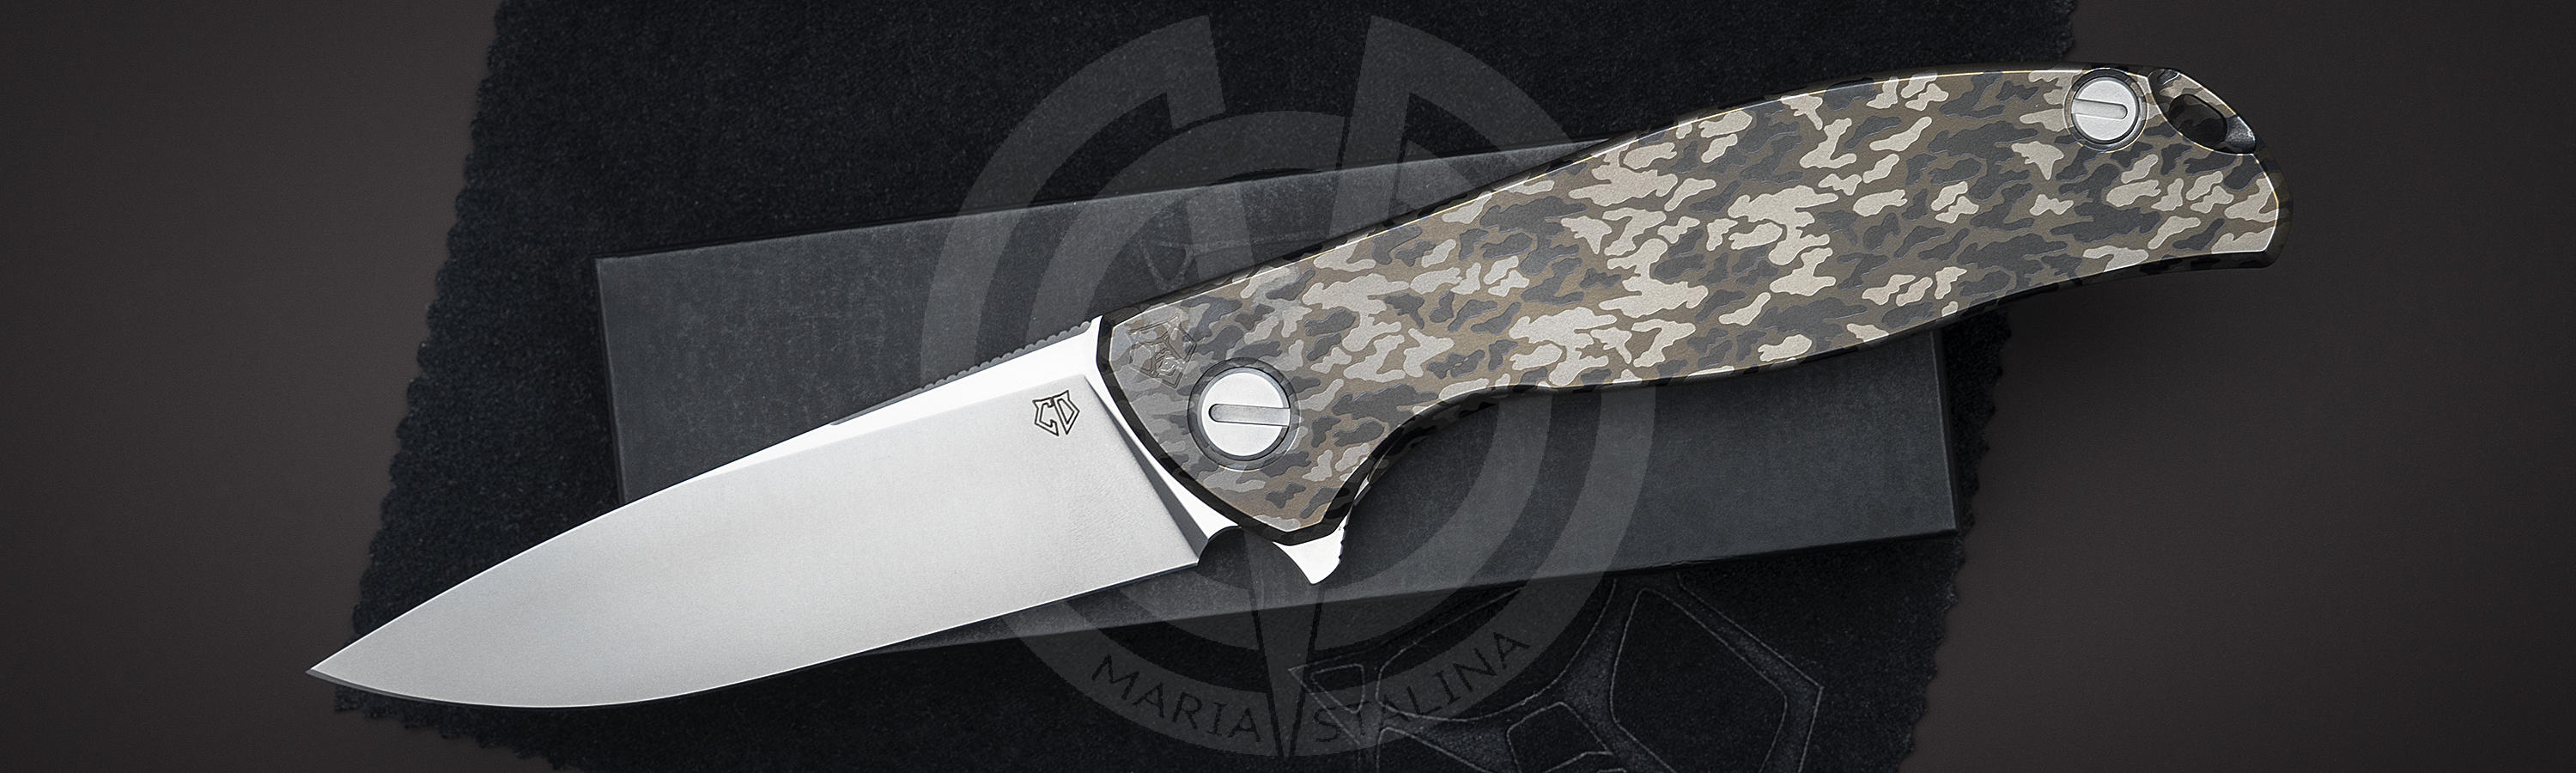 Auction knife Flipper 95